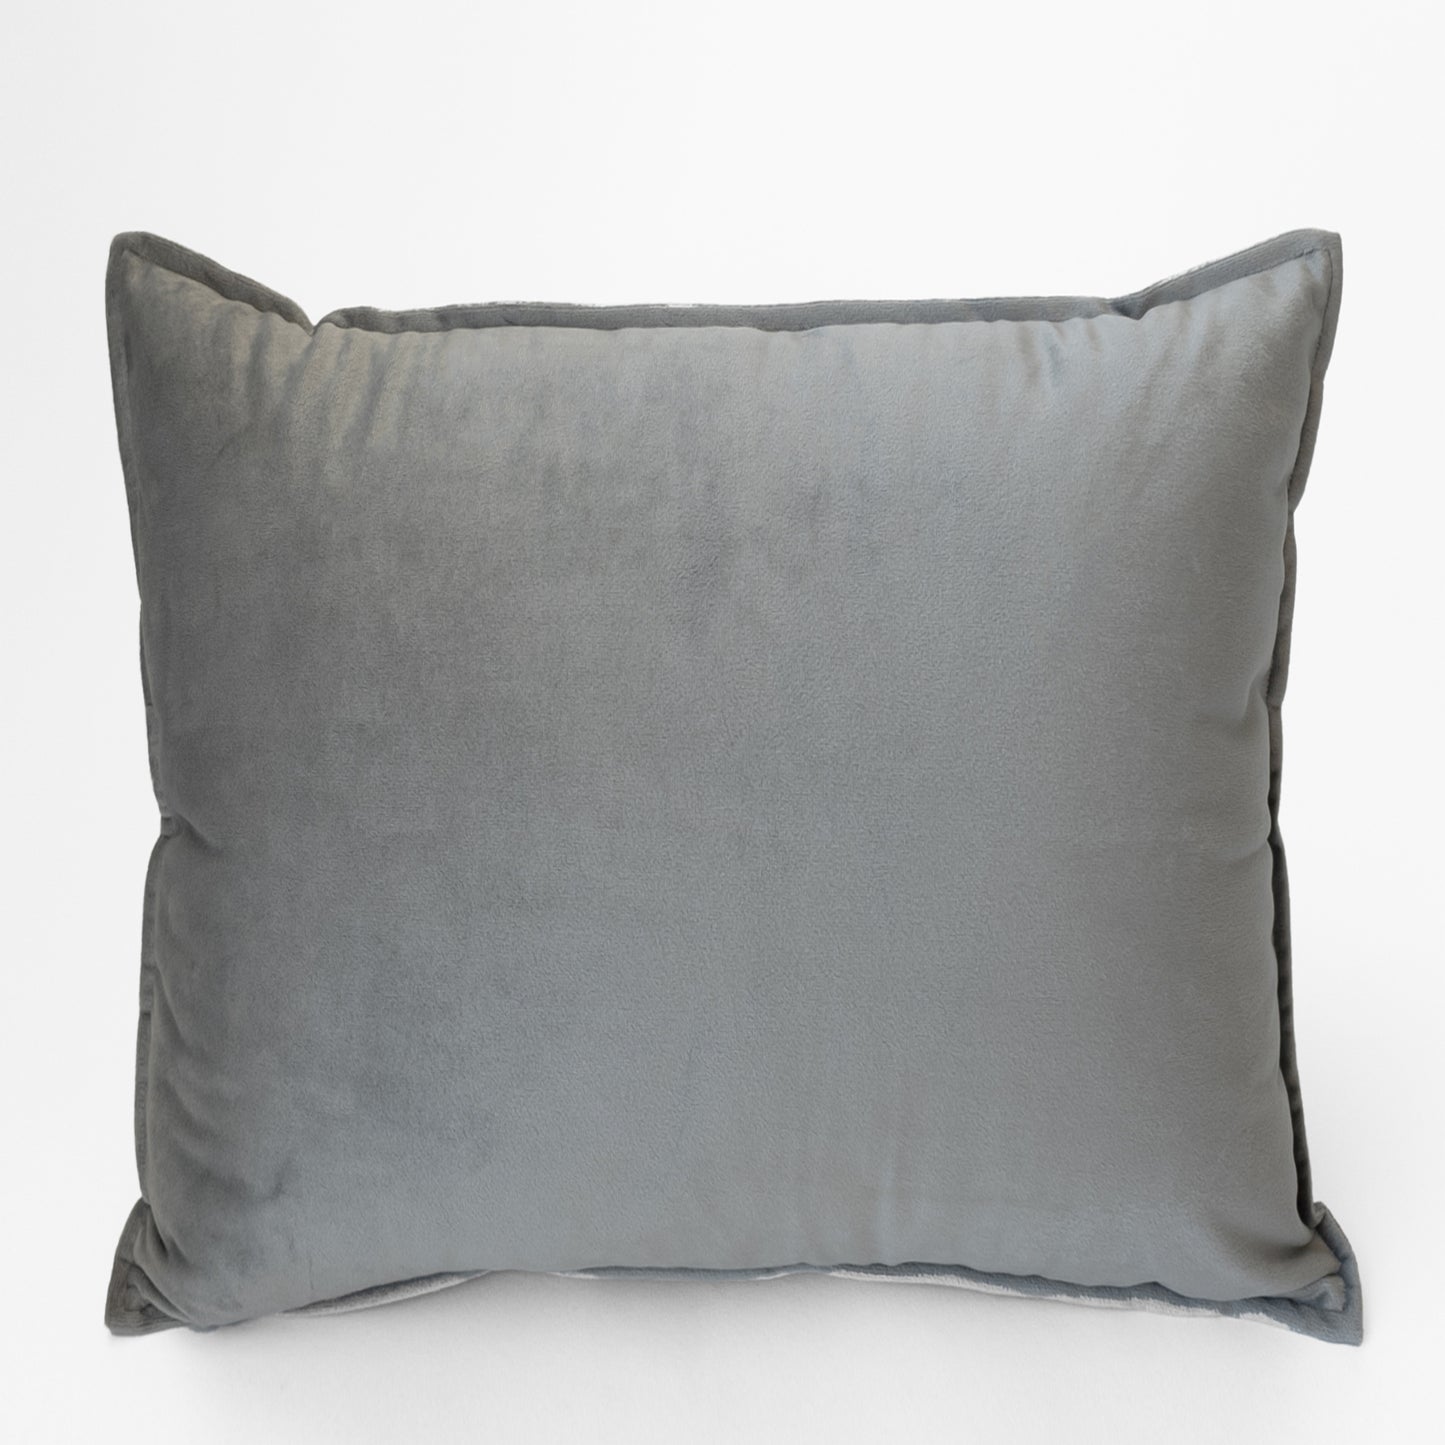 Gray velvet square decorative pillow.